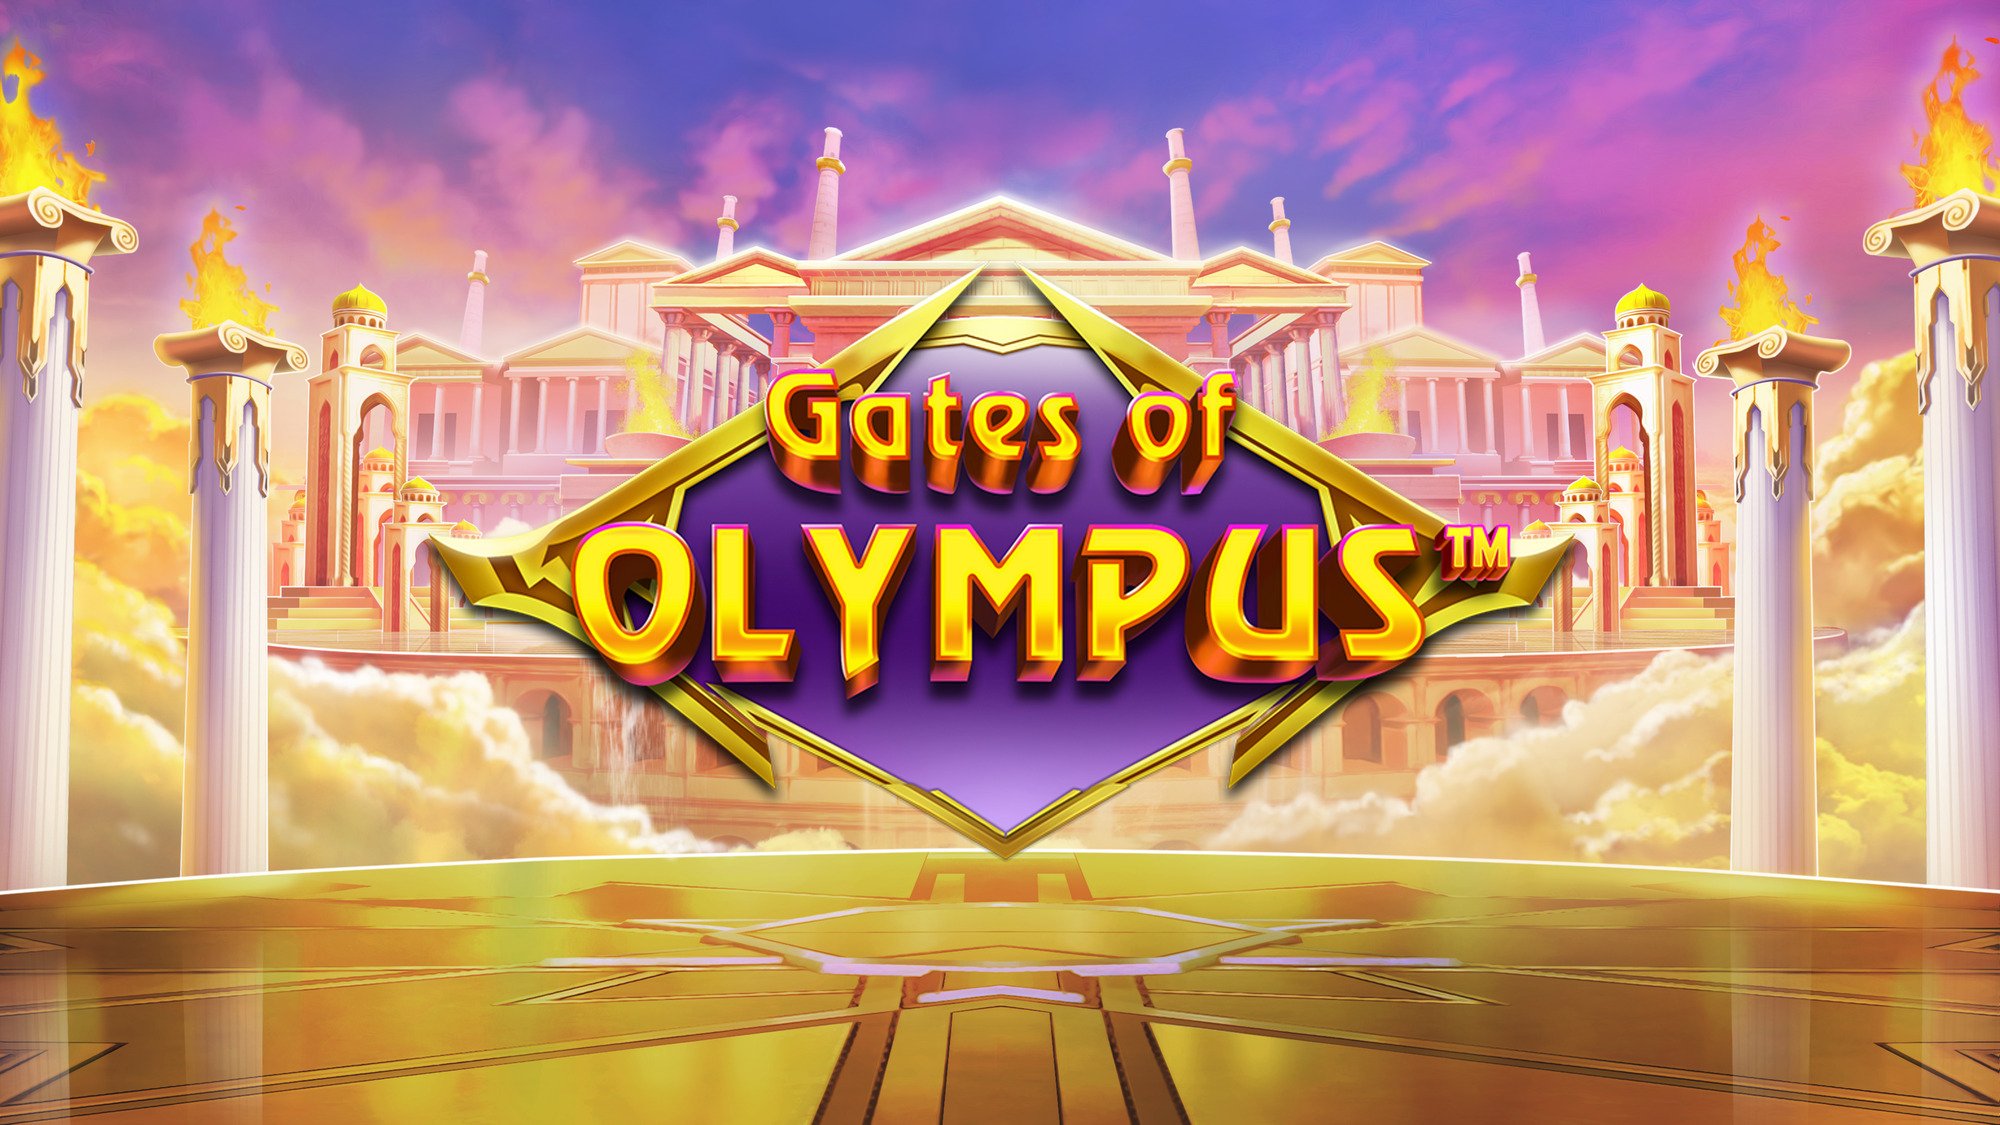 Gates of Olympys Slot Game